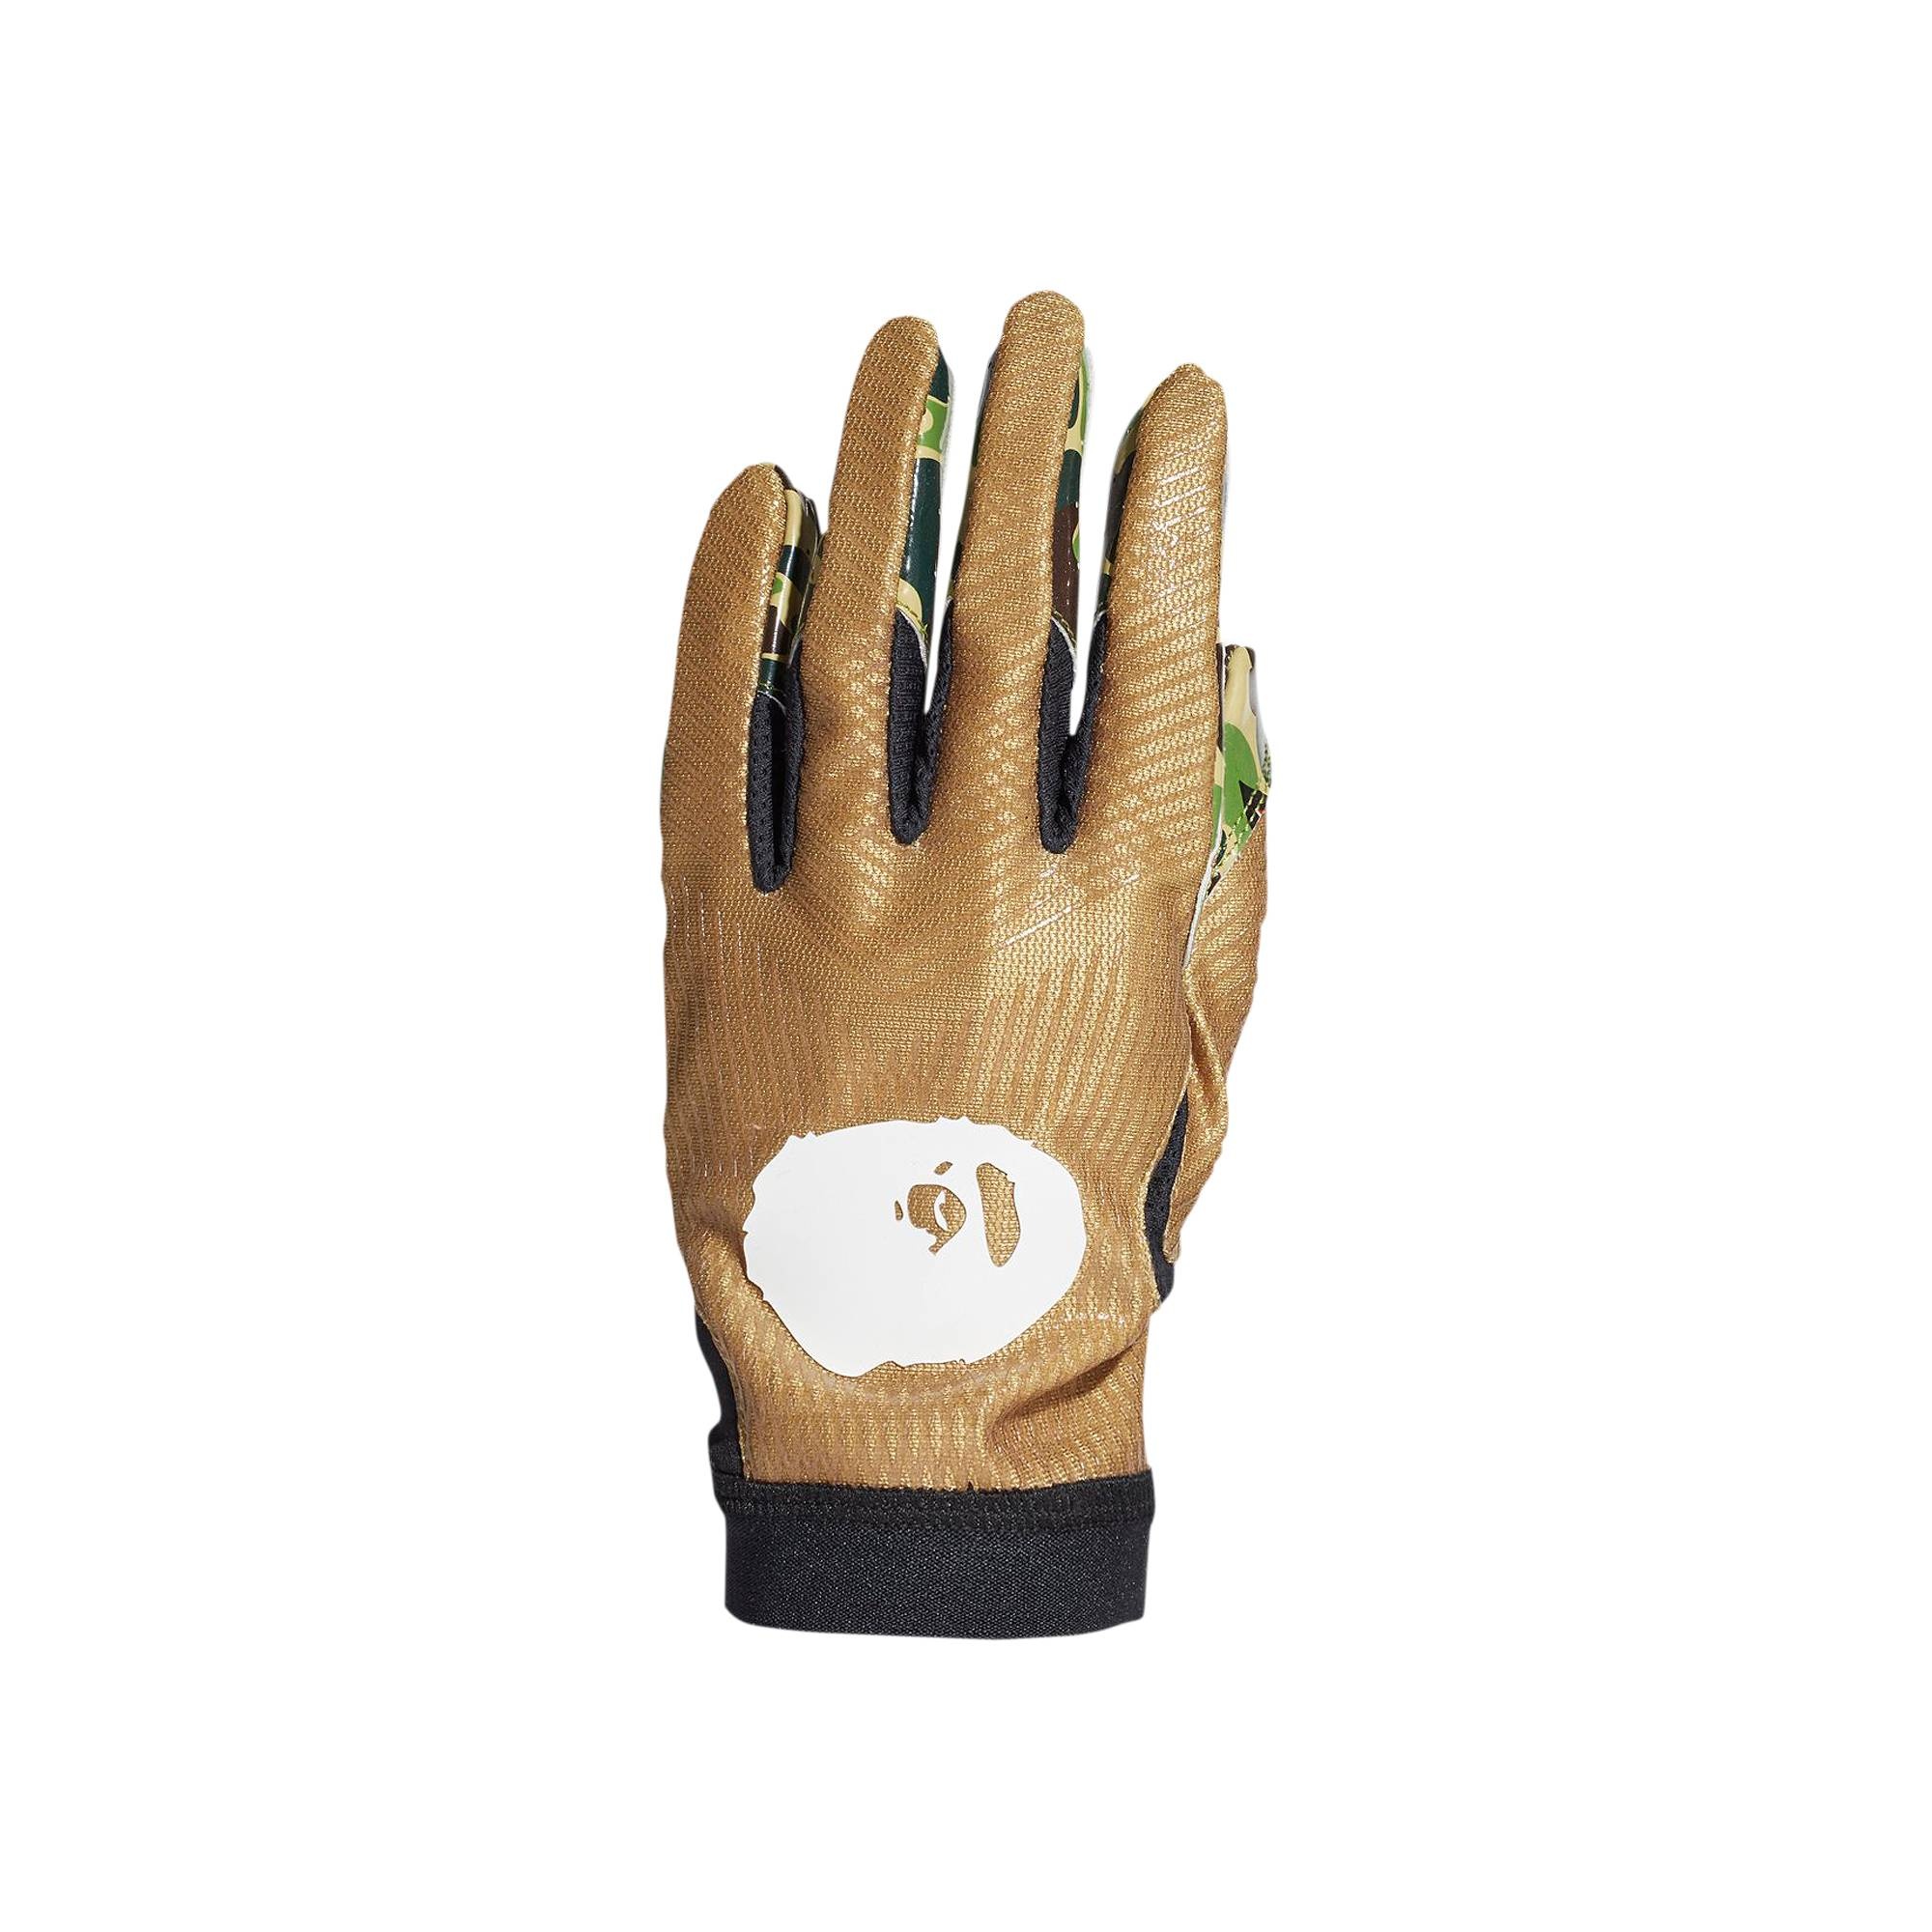 BAPE x adidas Adizero 8.0 Gloves 'Green' - 1